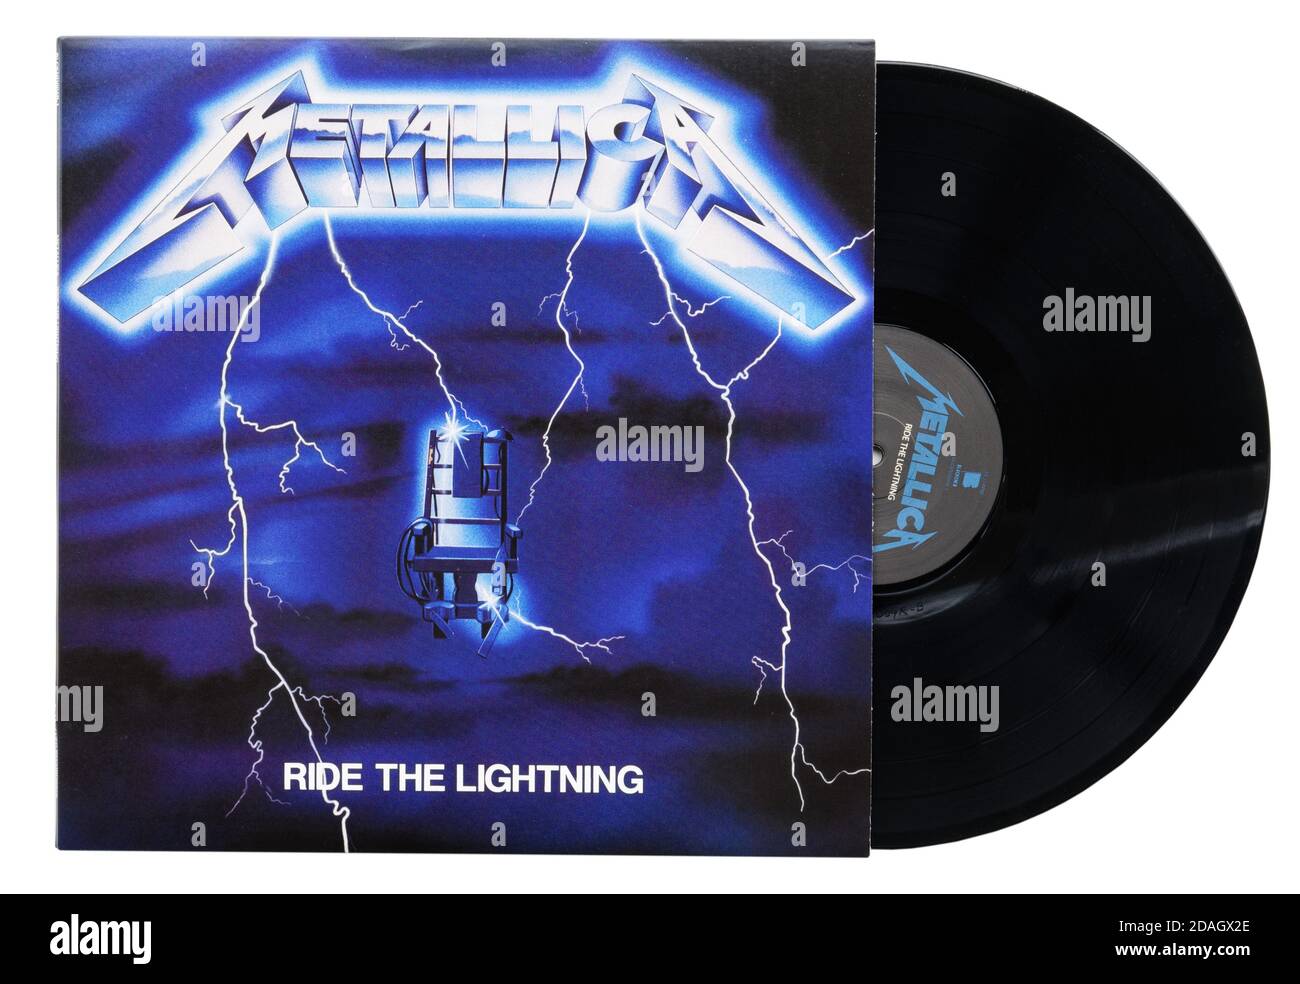 Ride the Lightning album by Metallica Stock Photo - Alamy